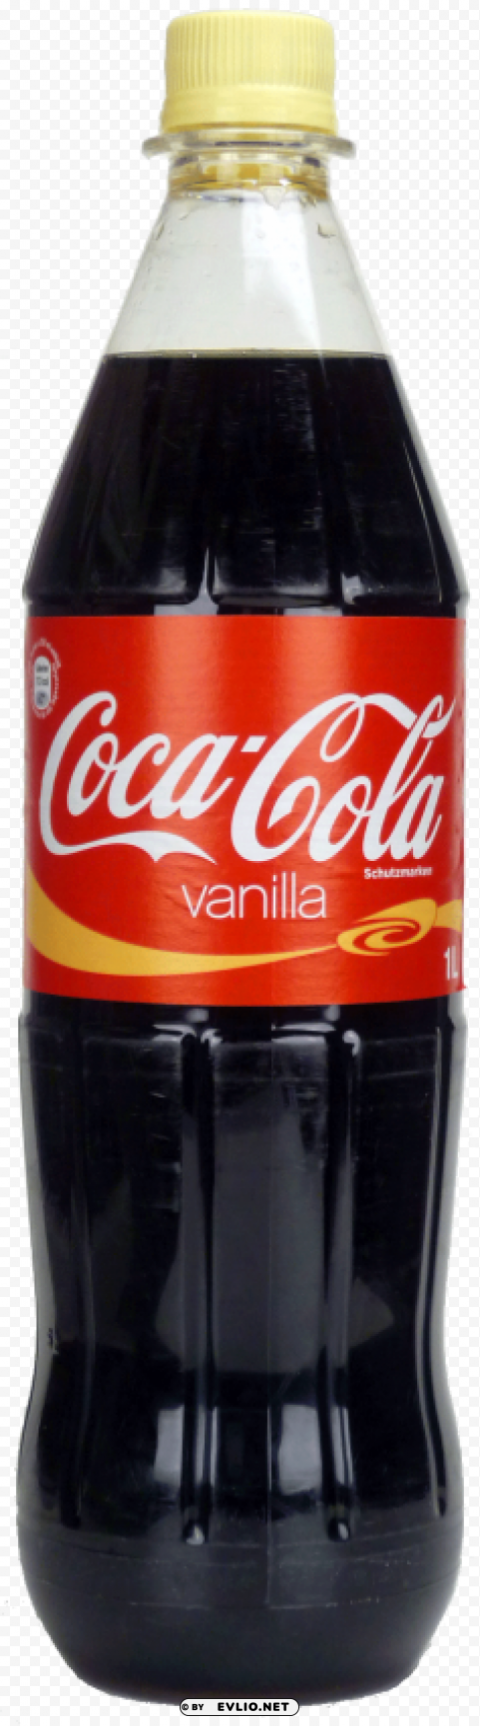 coca cola bottle High-quality transparent PNG images comprehensive set